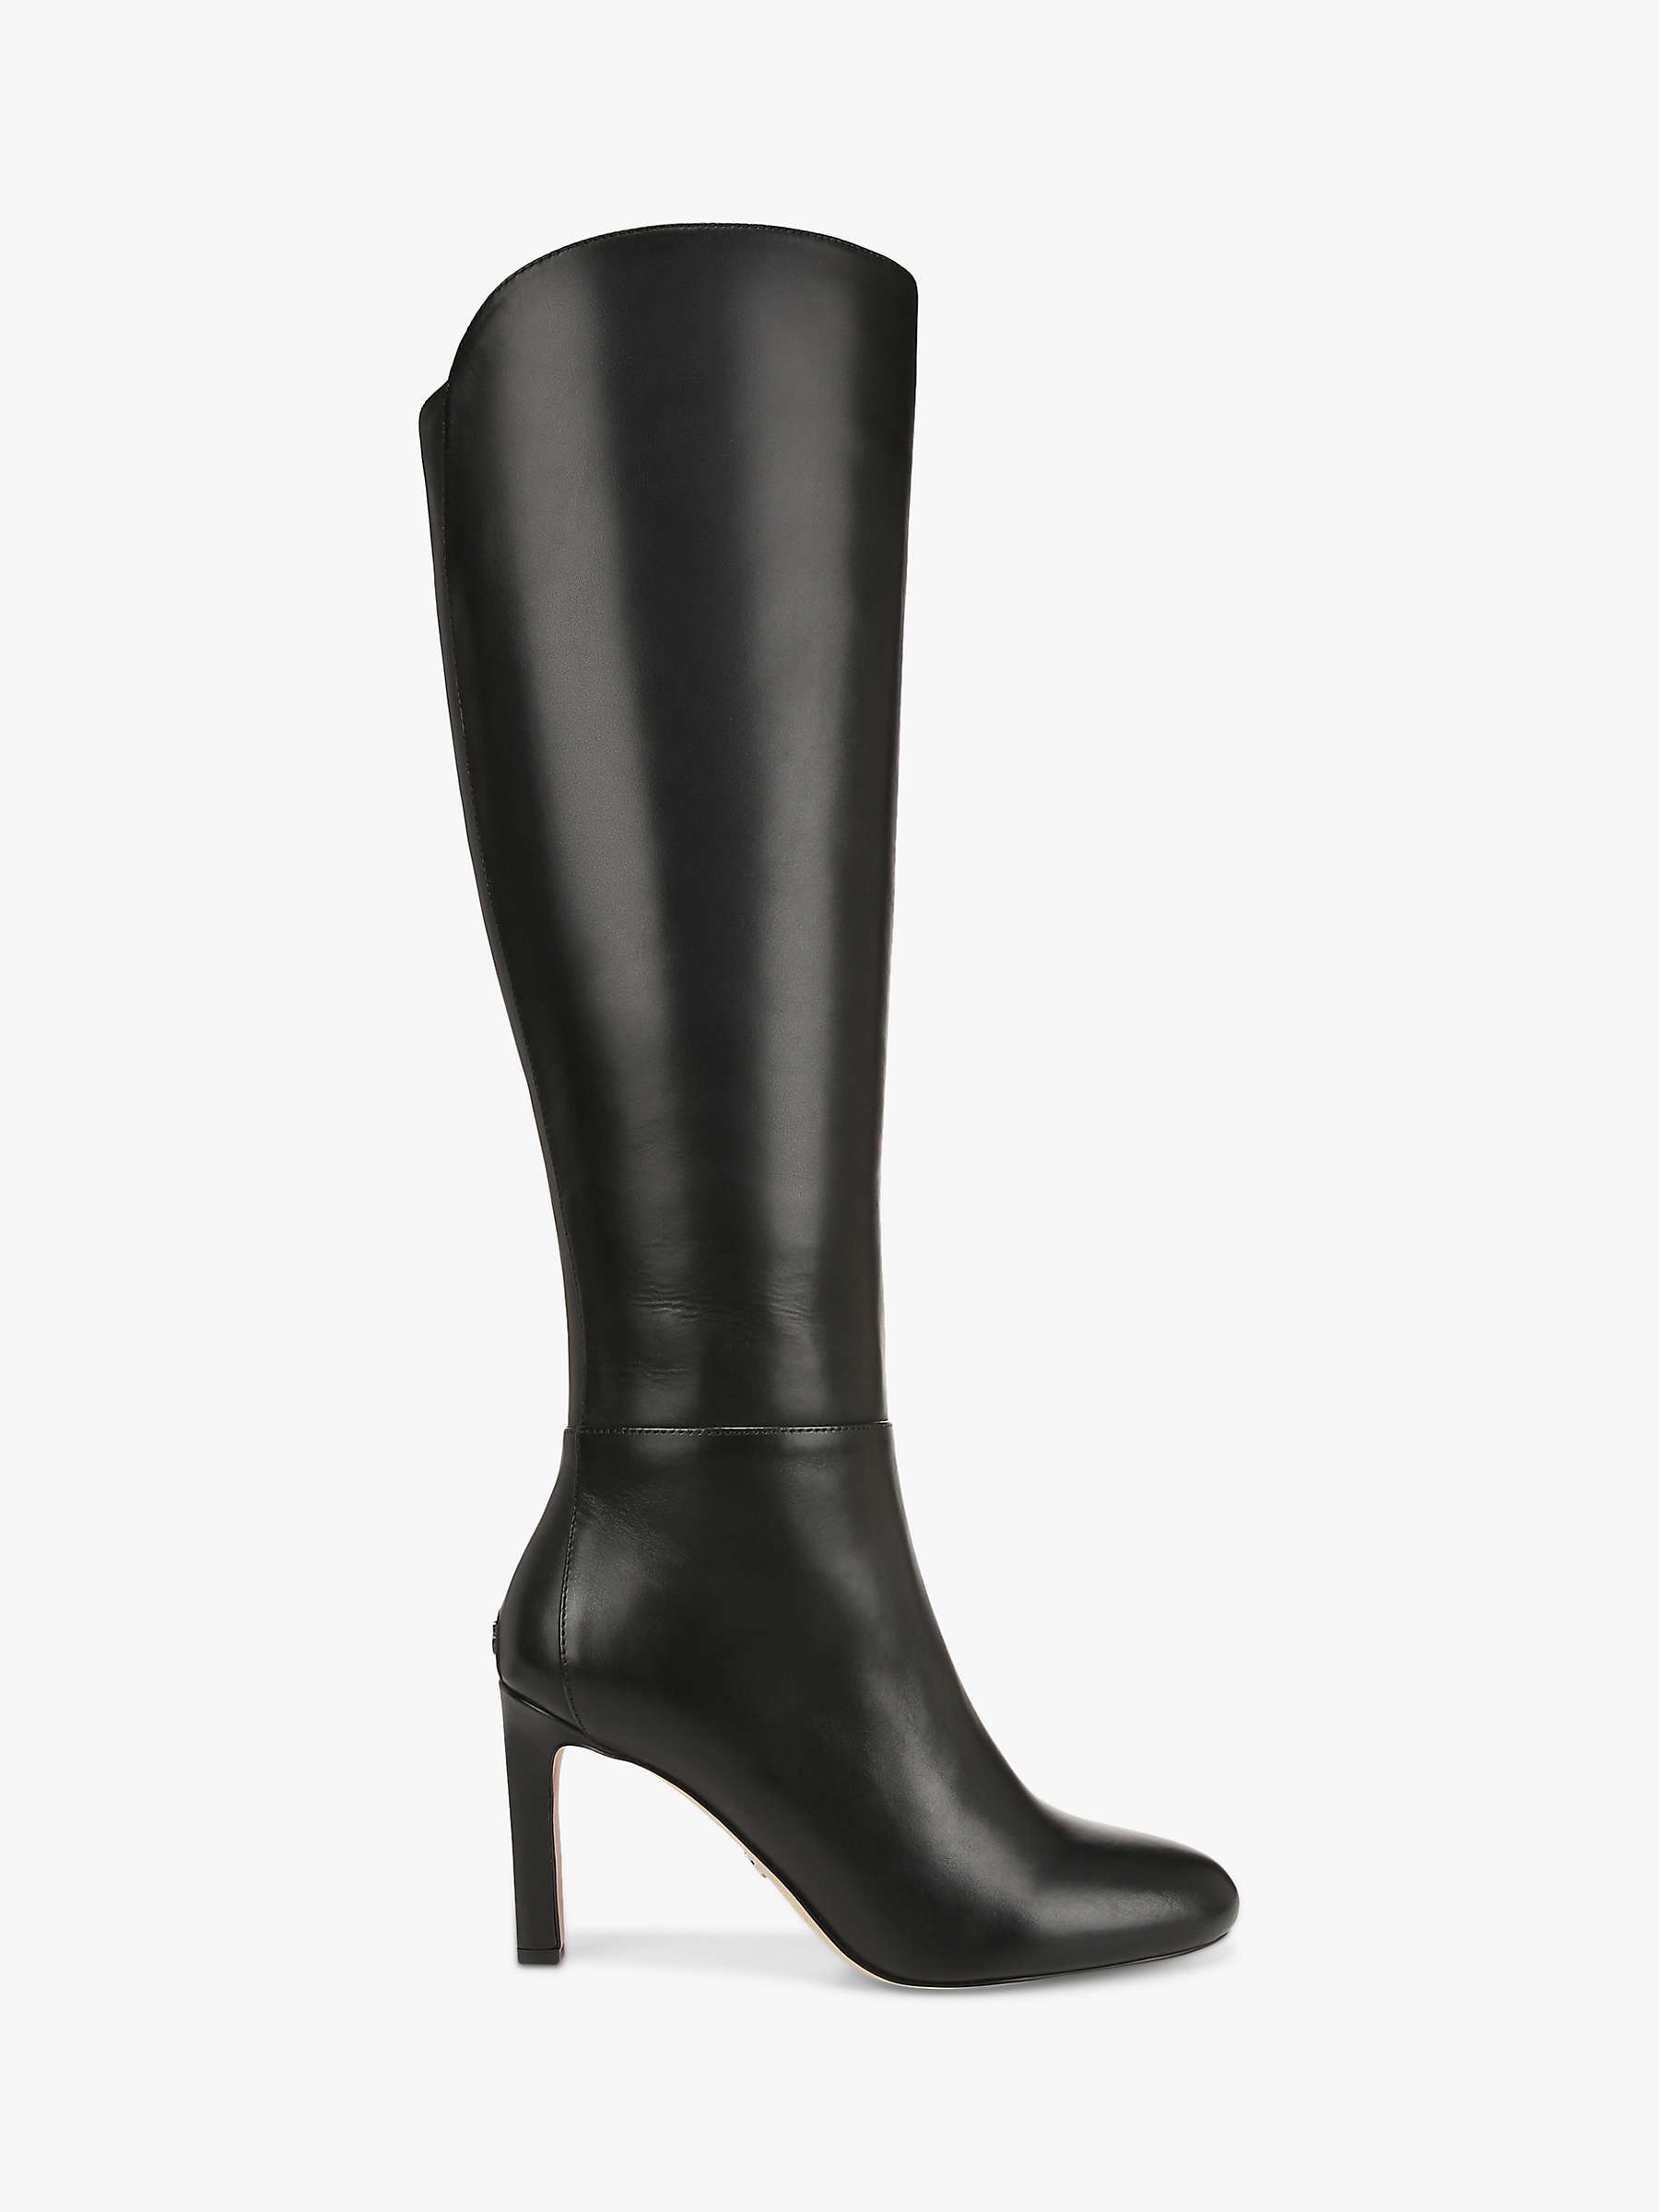 Buy Sam Edelman Shauna Knee High Leather Boots, Black Online at johnlewis.com